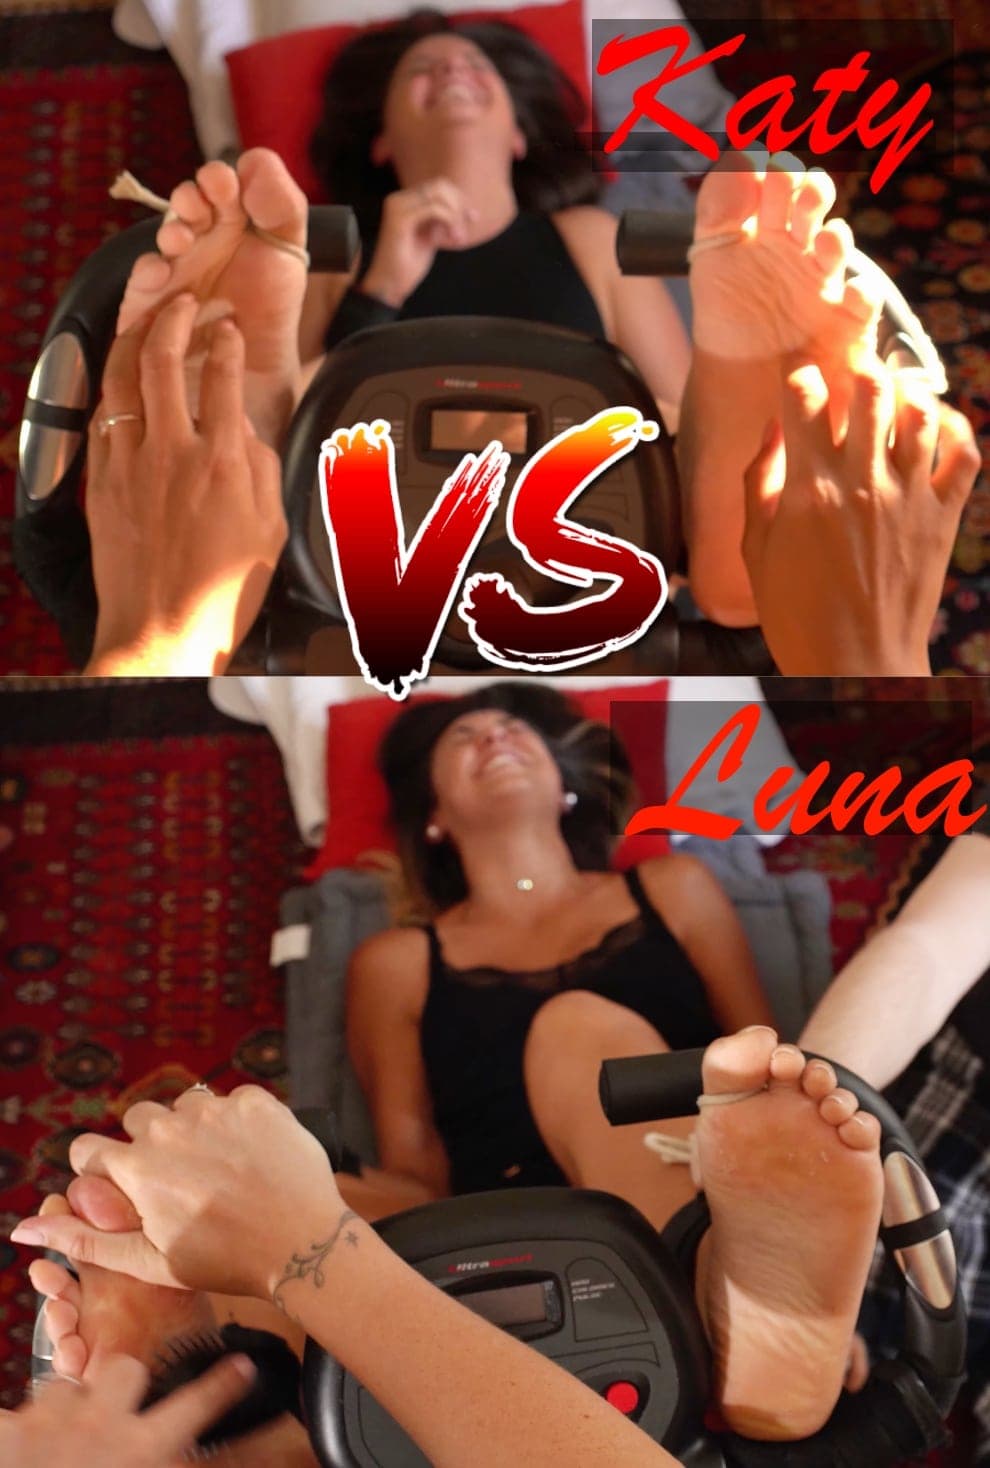 Katy vs luna feet up